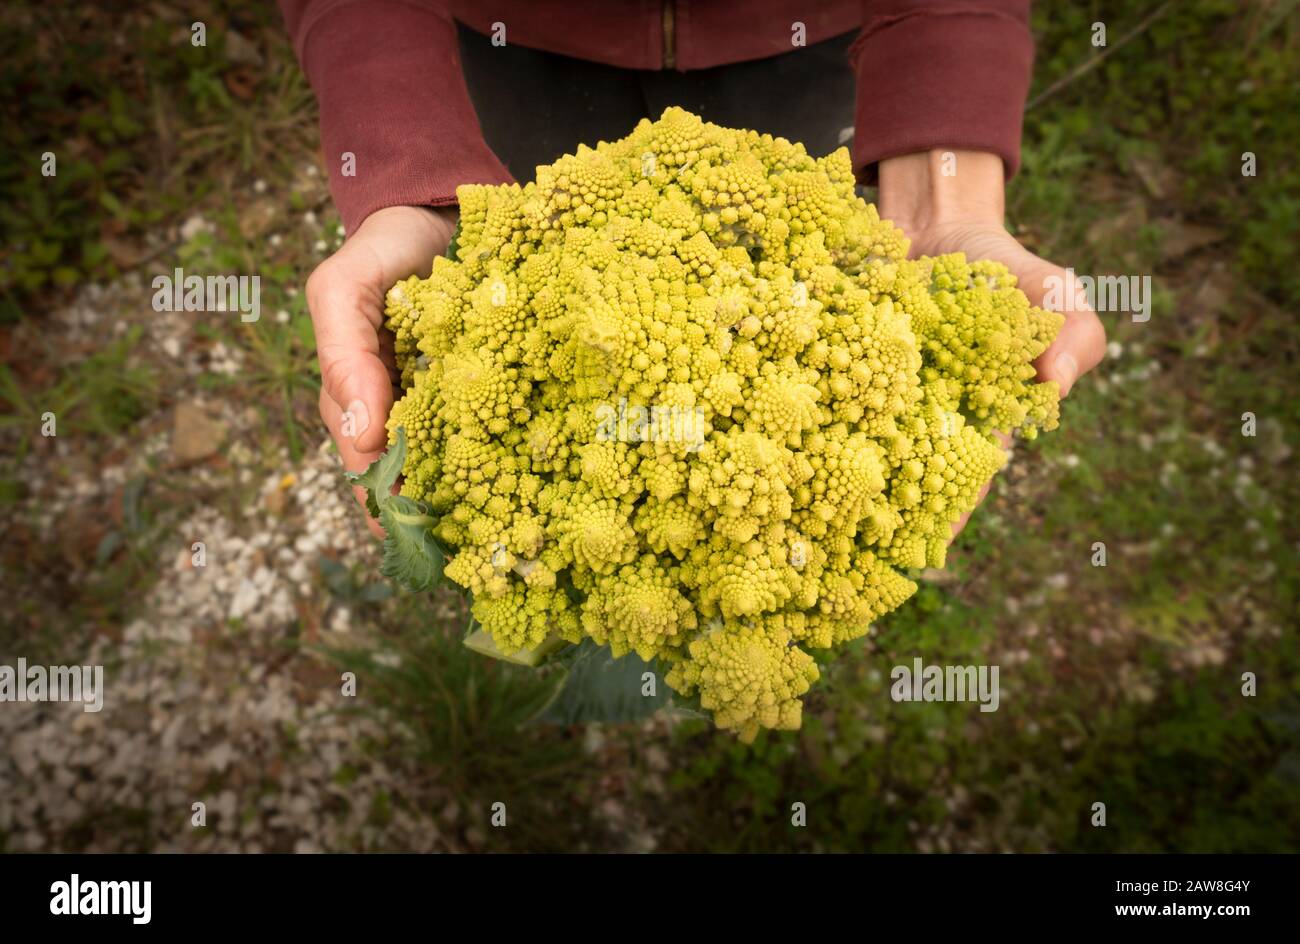 Hands holding a just harvested Romanesco broccoli, Roman broccoli. Stock Photo